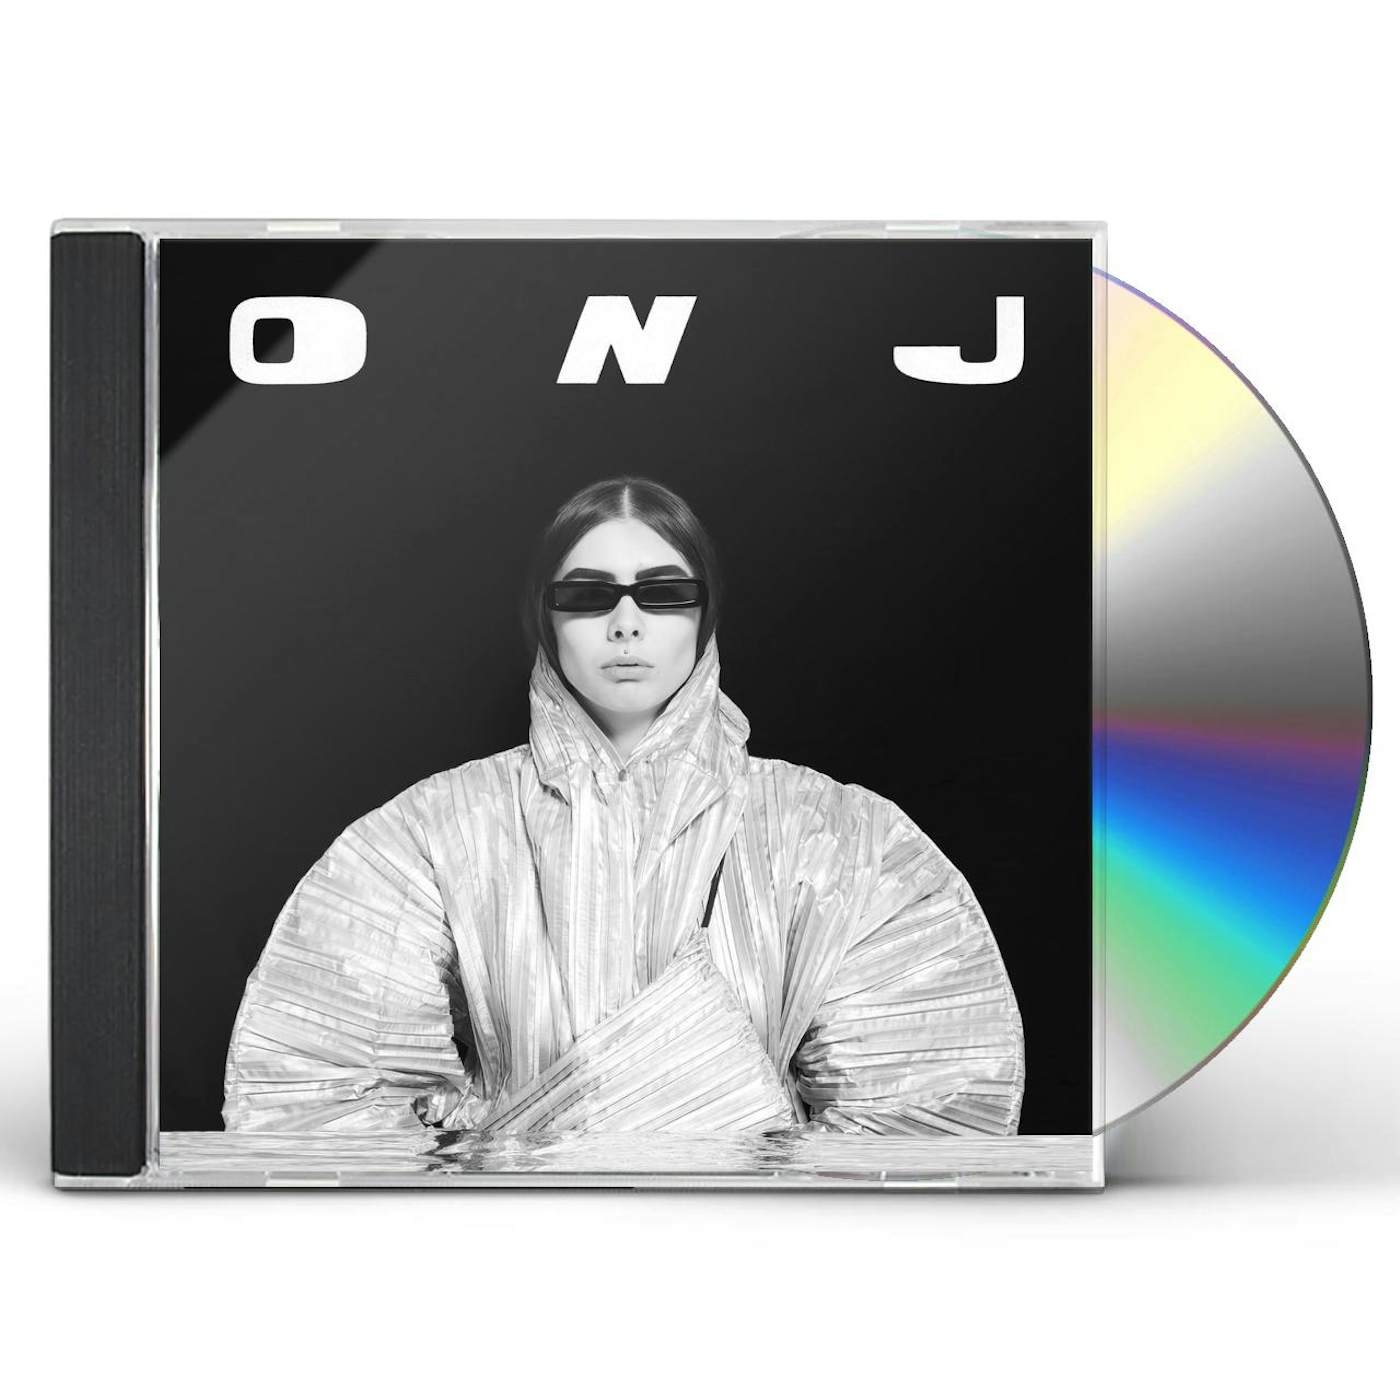 OLIVIA NEUTRON-JOHN CD